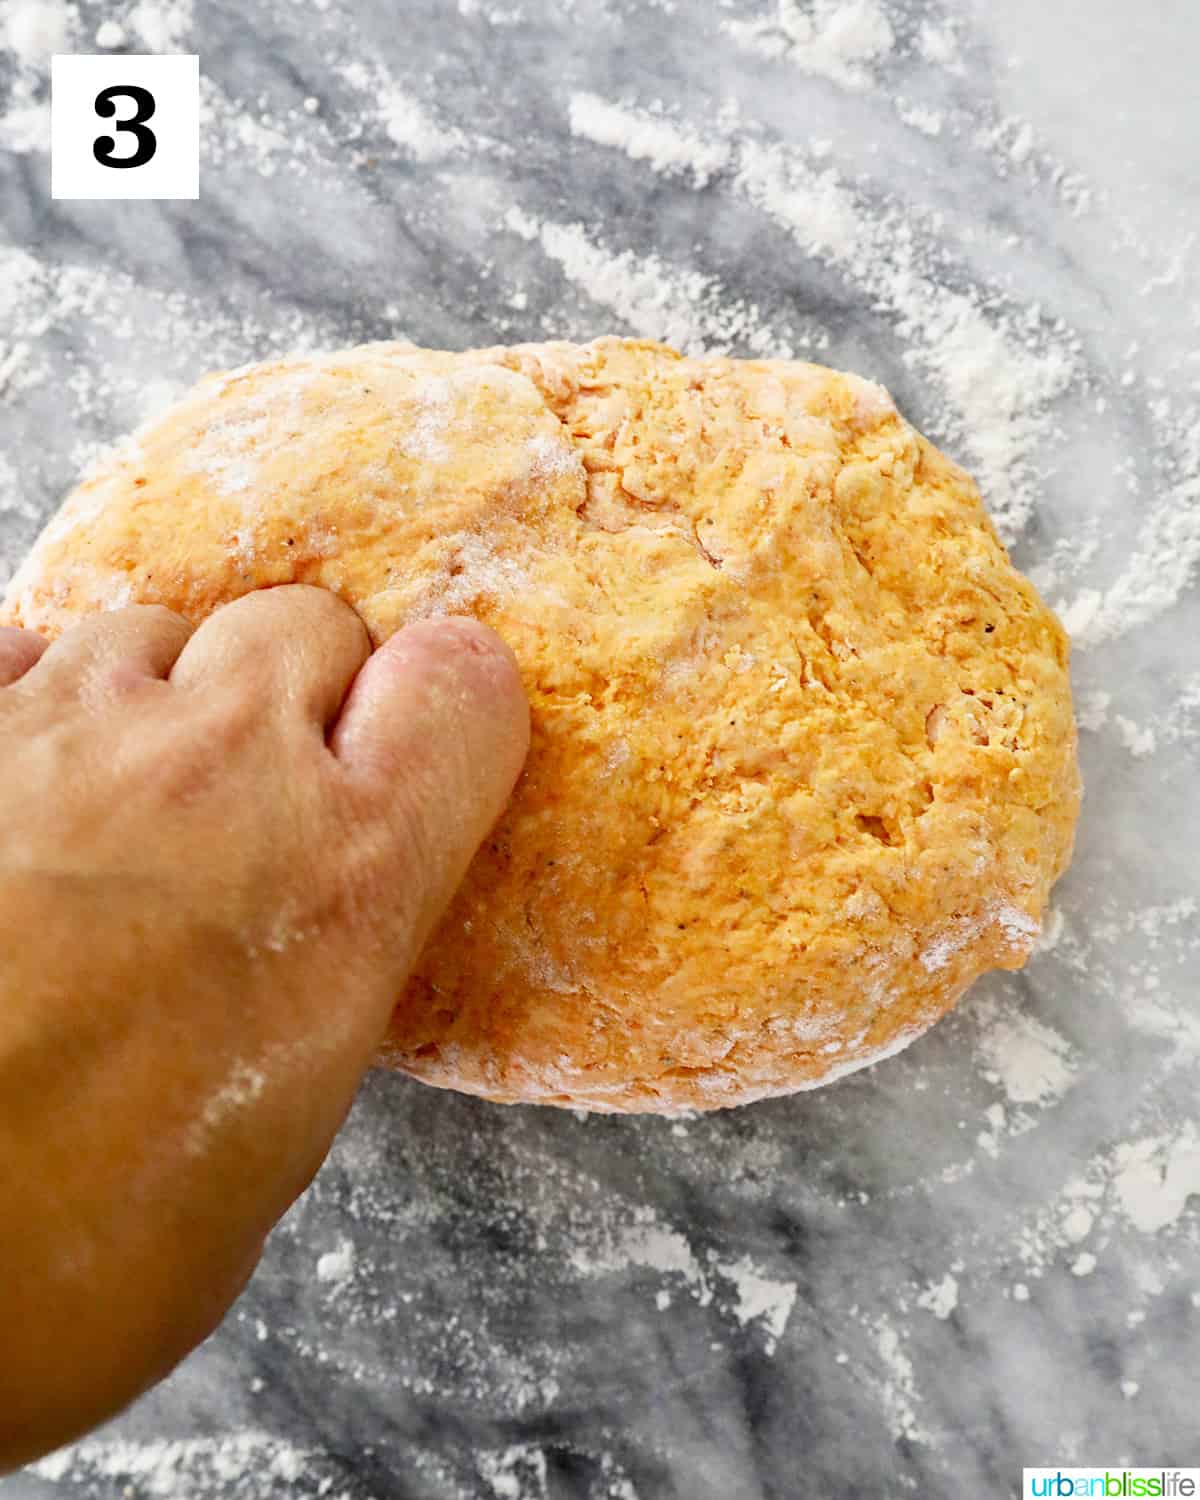 kneading pumpkin gnocchi dough on a marble countertop.